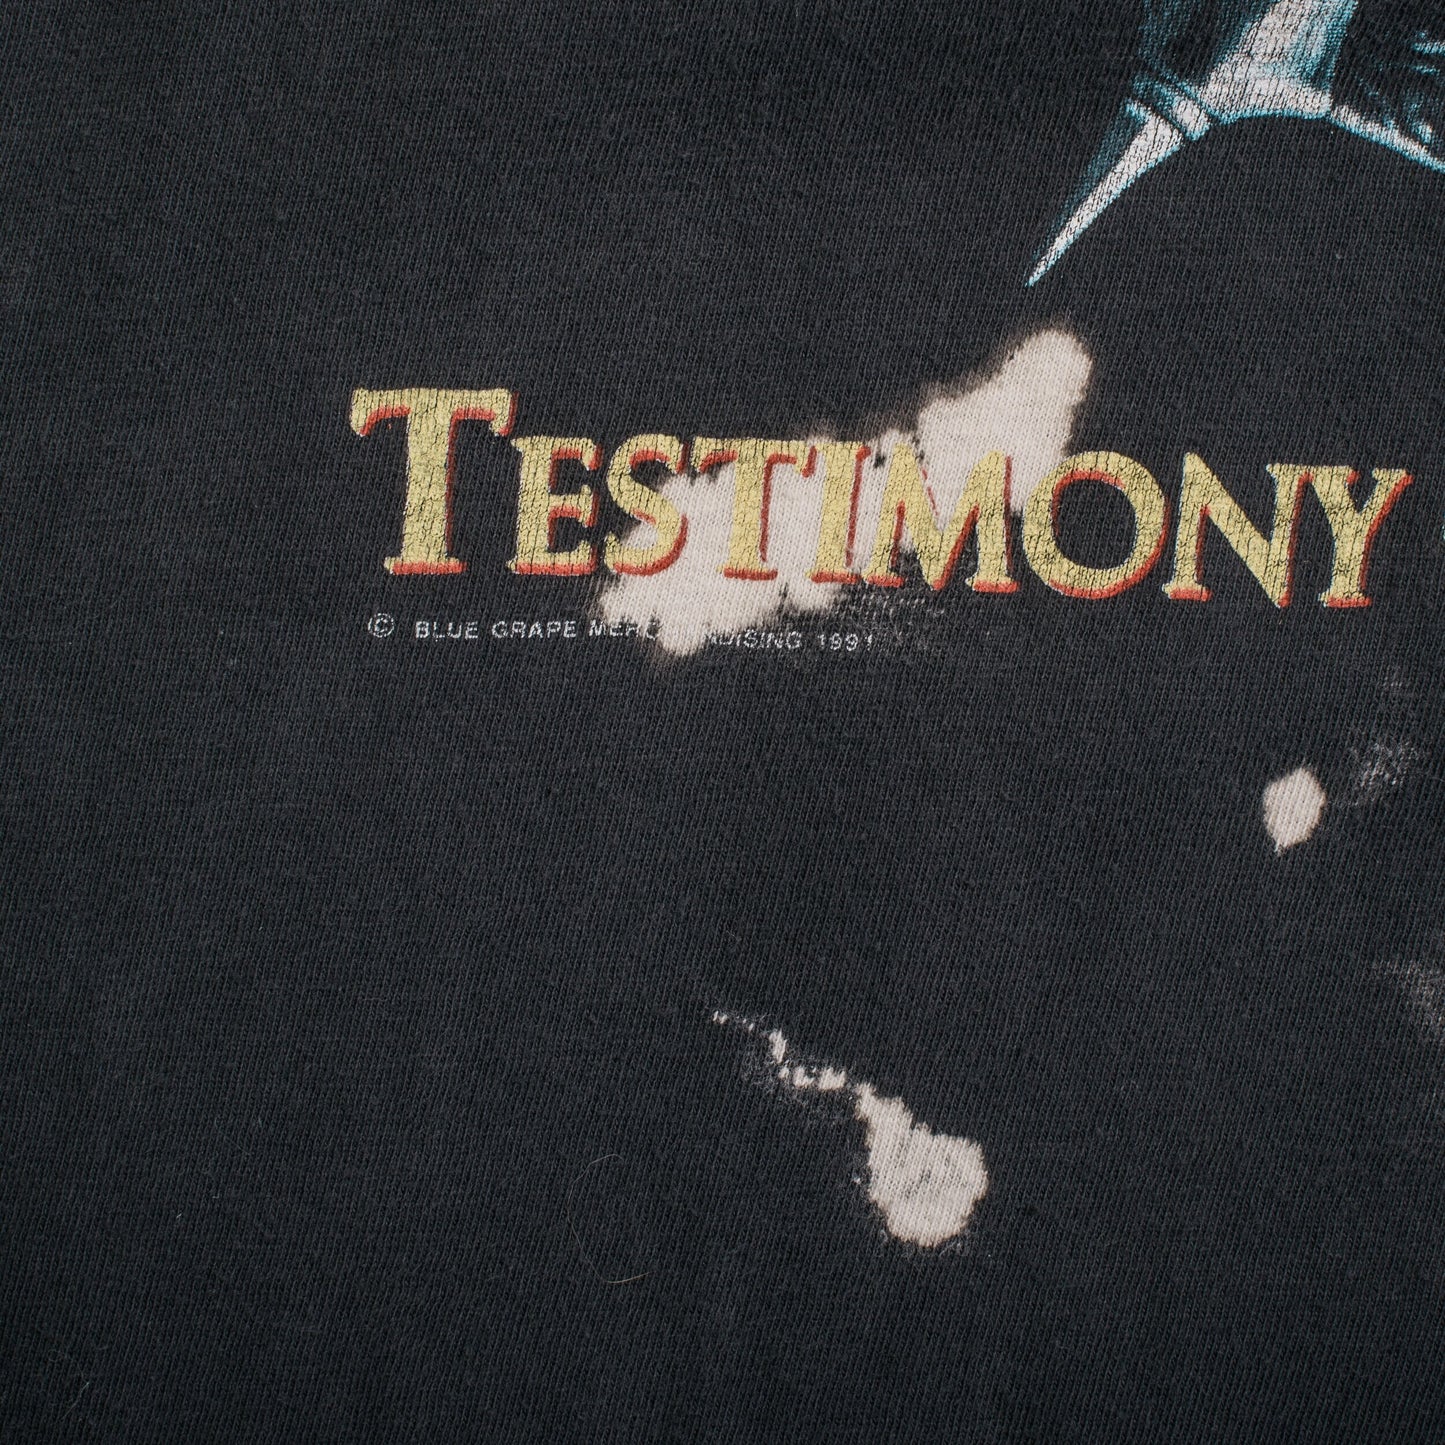 Vintage 1991 Pestilence Testimony Of The Ancients T-Shirt